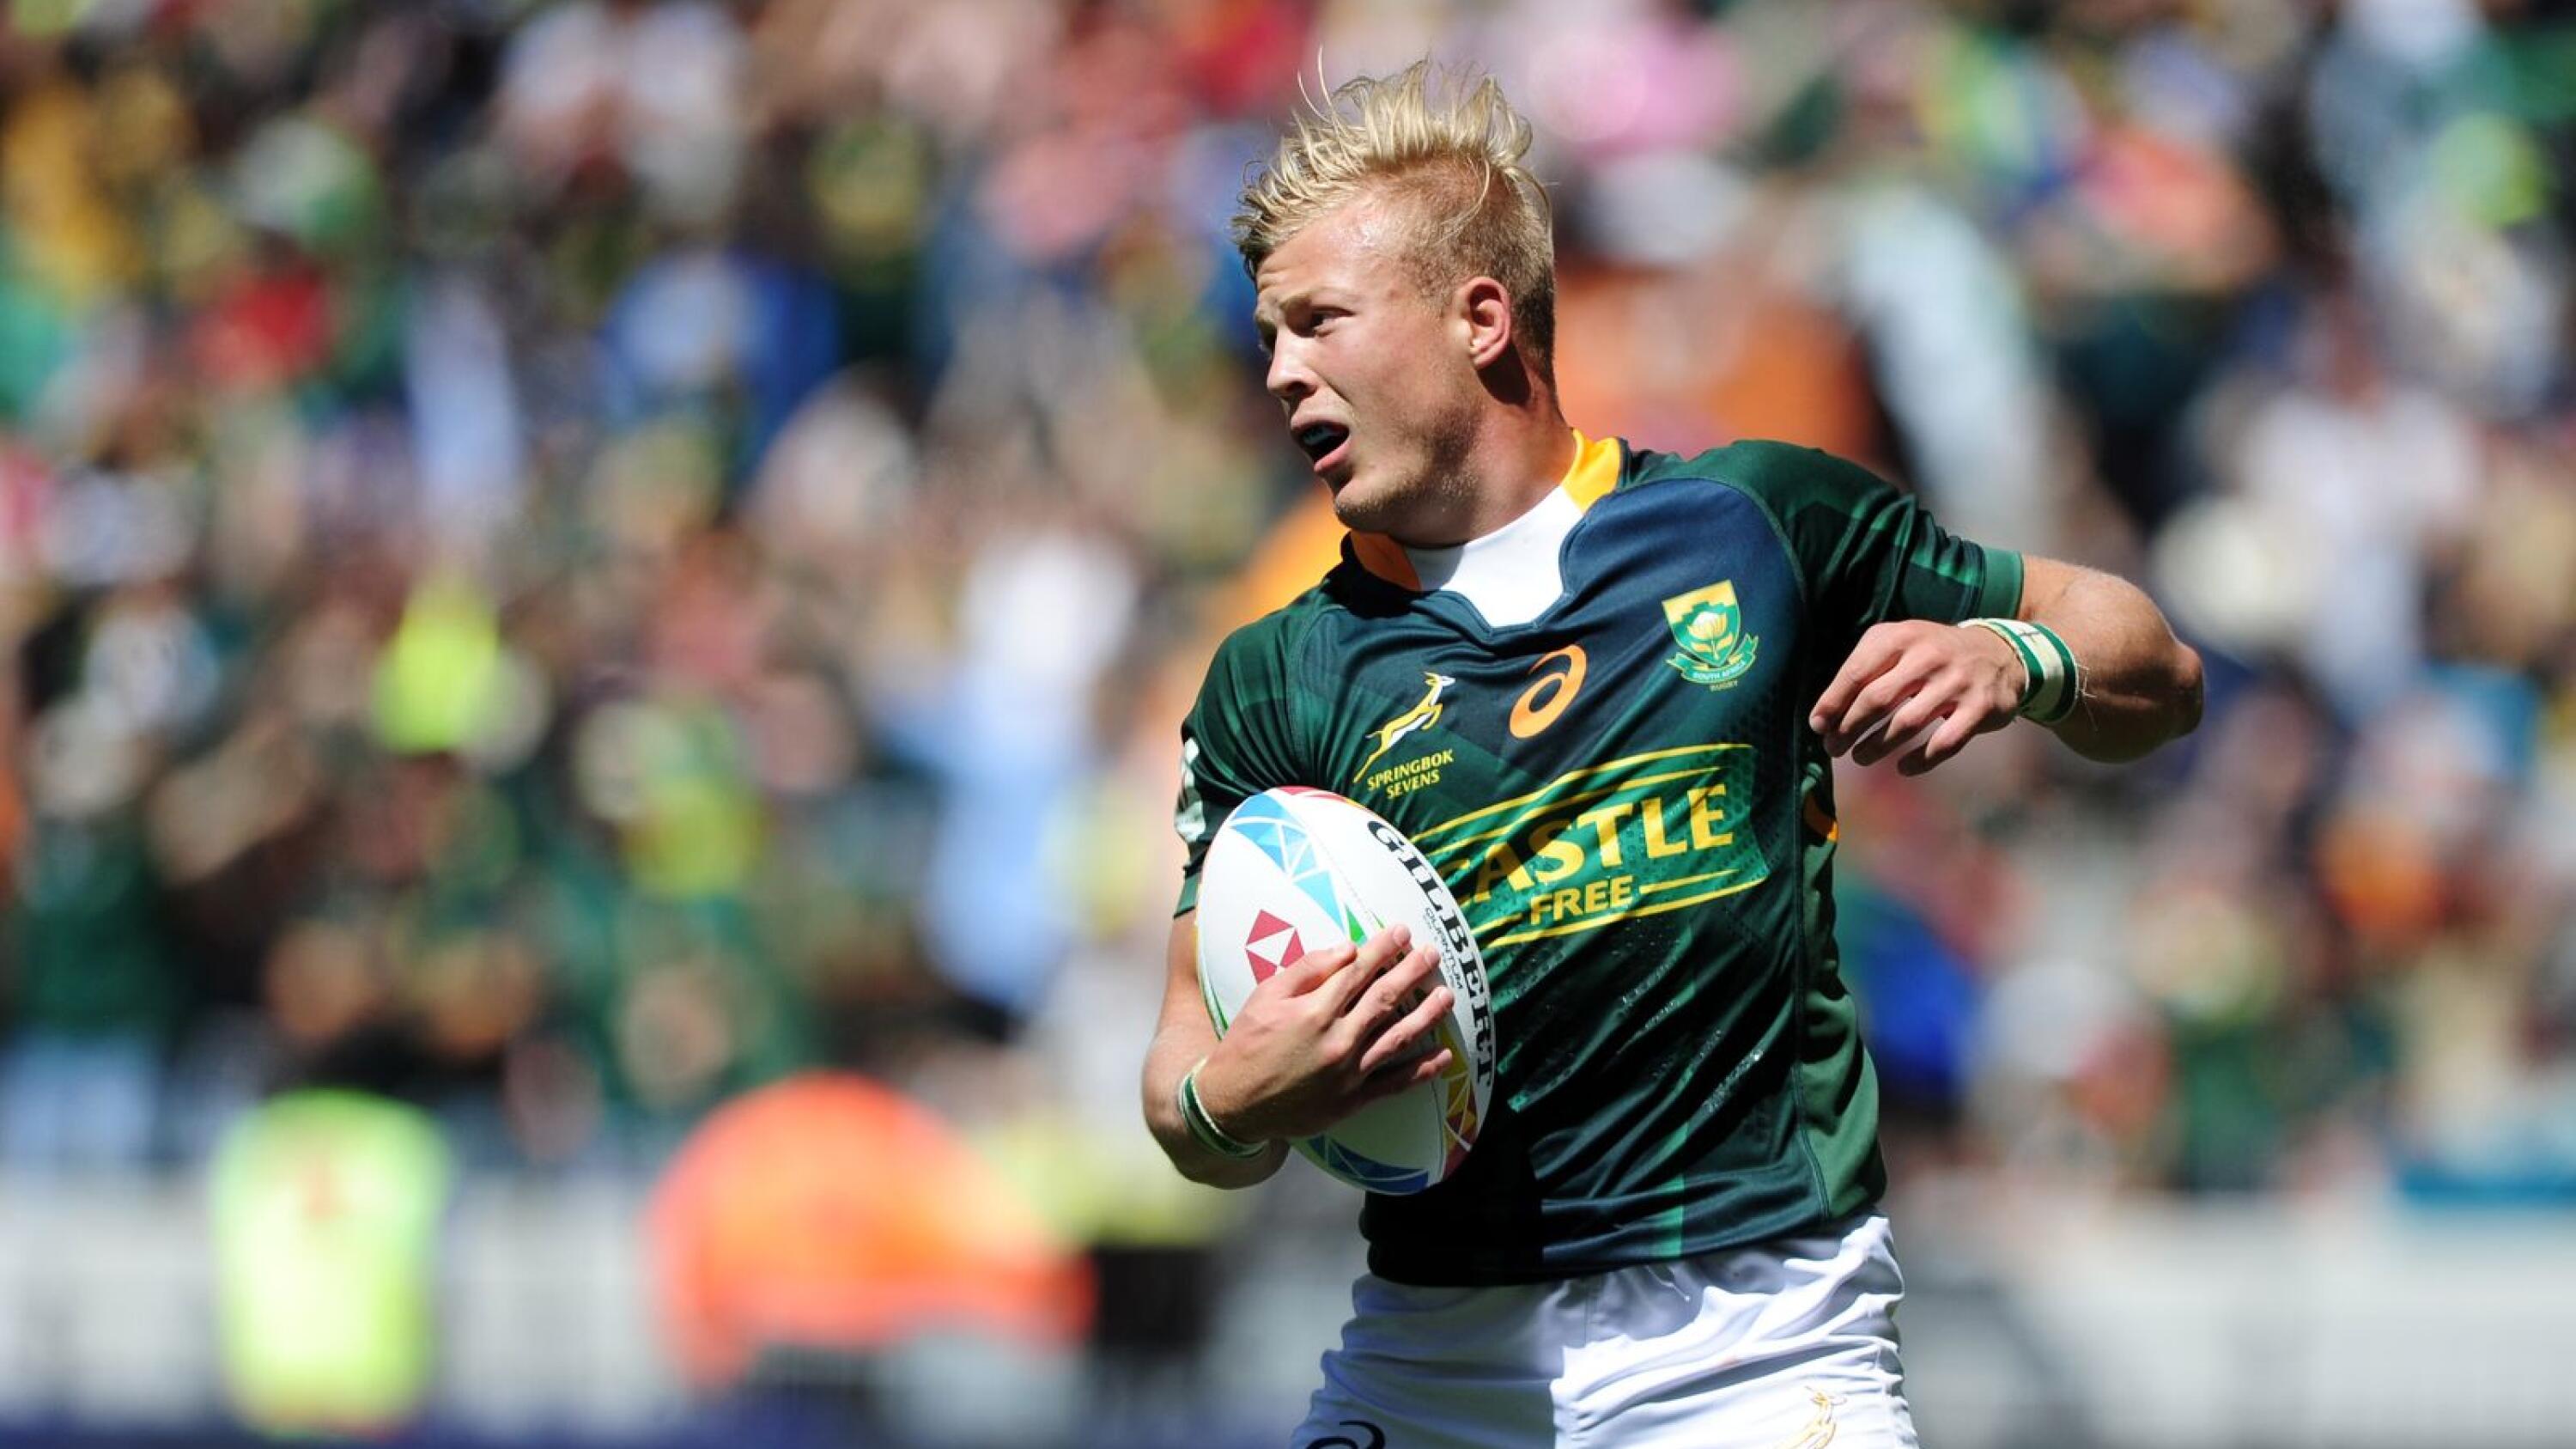 Blitzboks’ JC Pretorius in action at the 2019 Cape Town Sevens